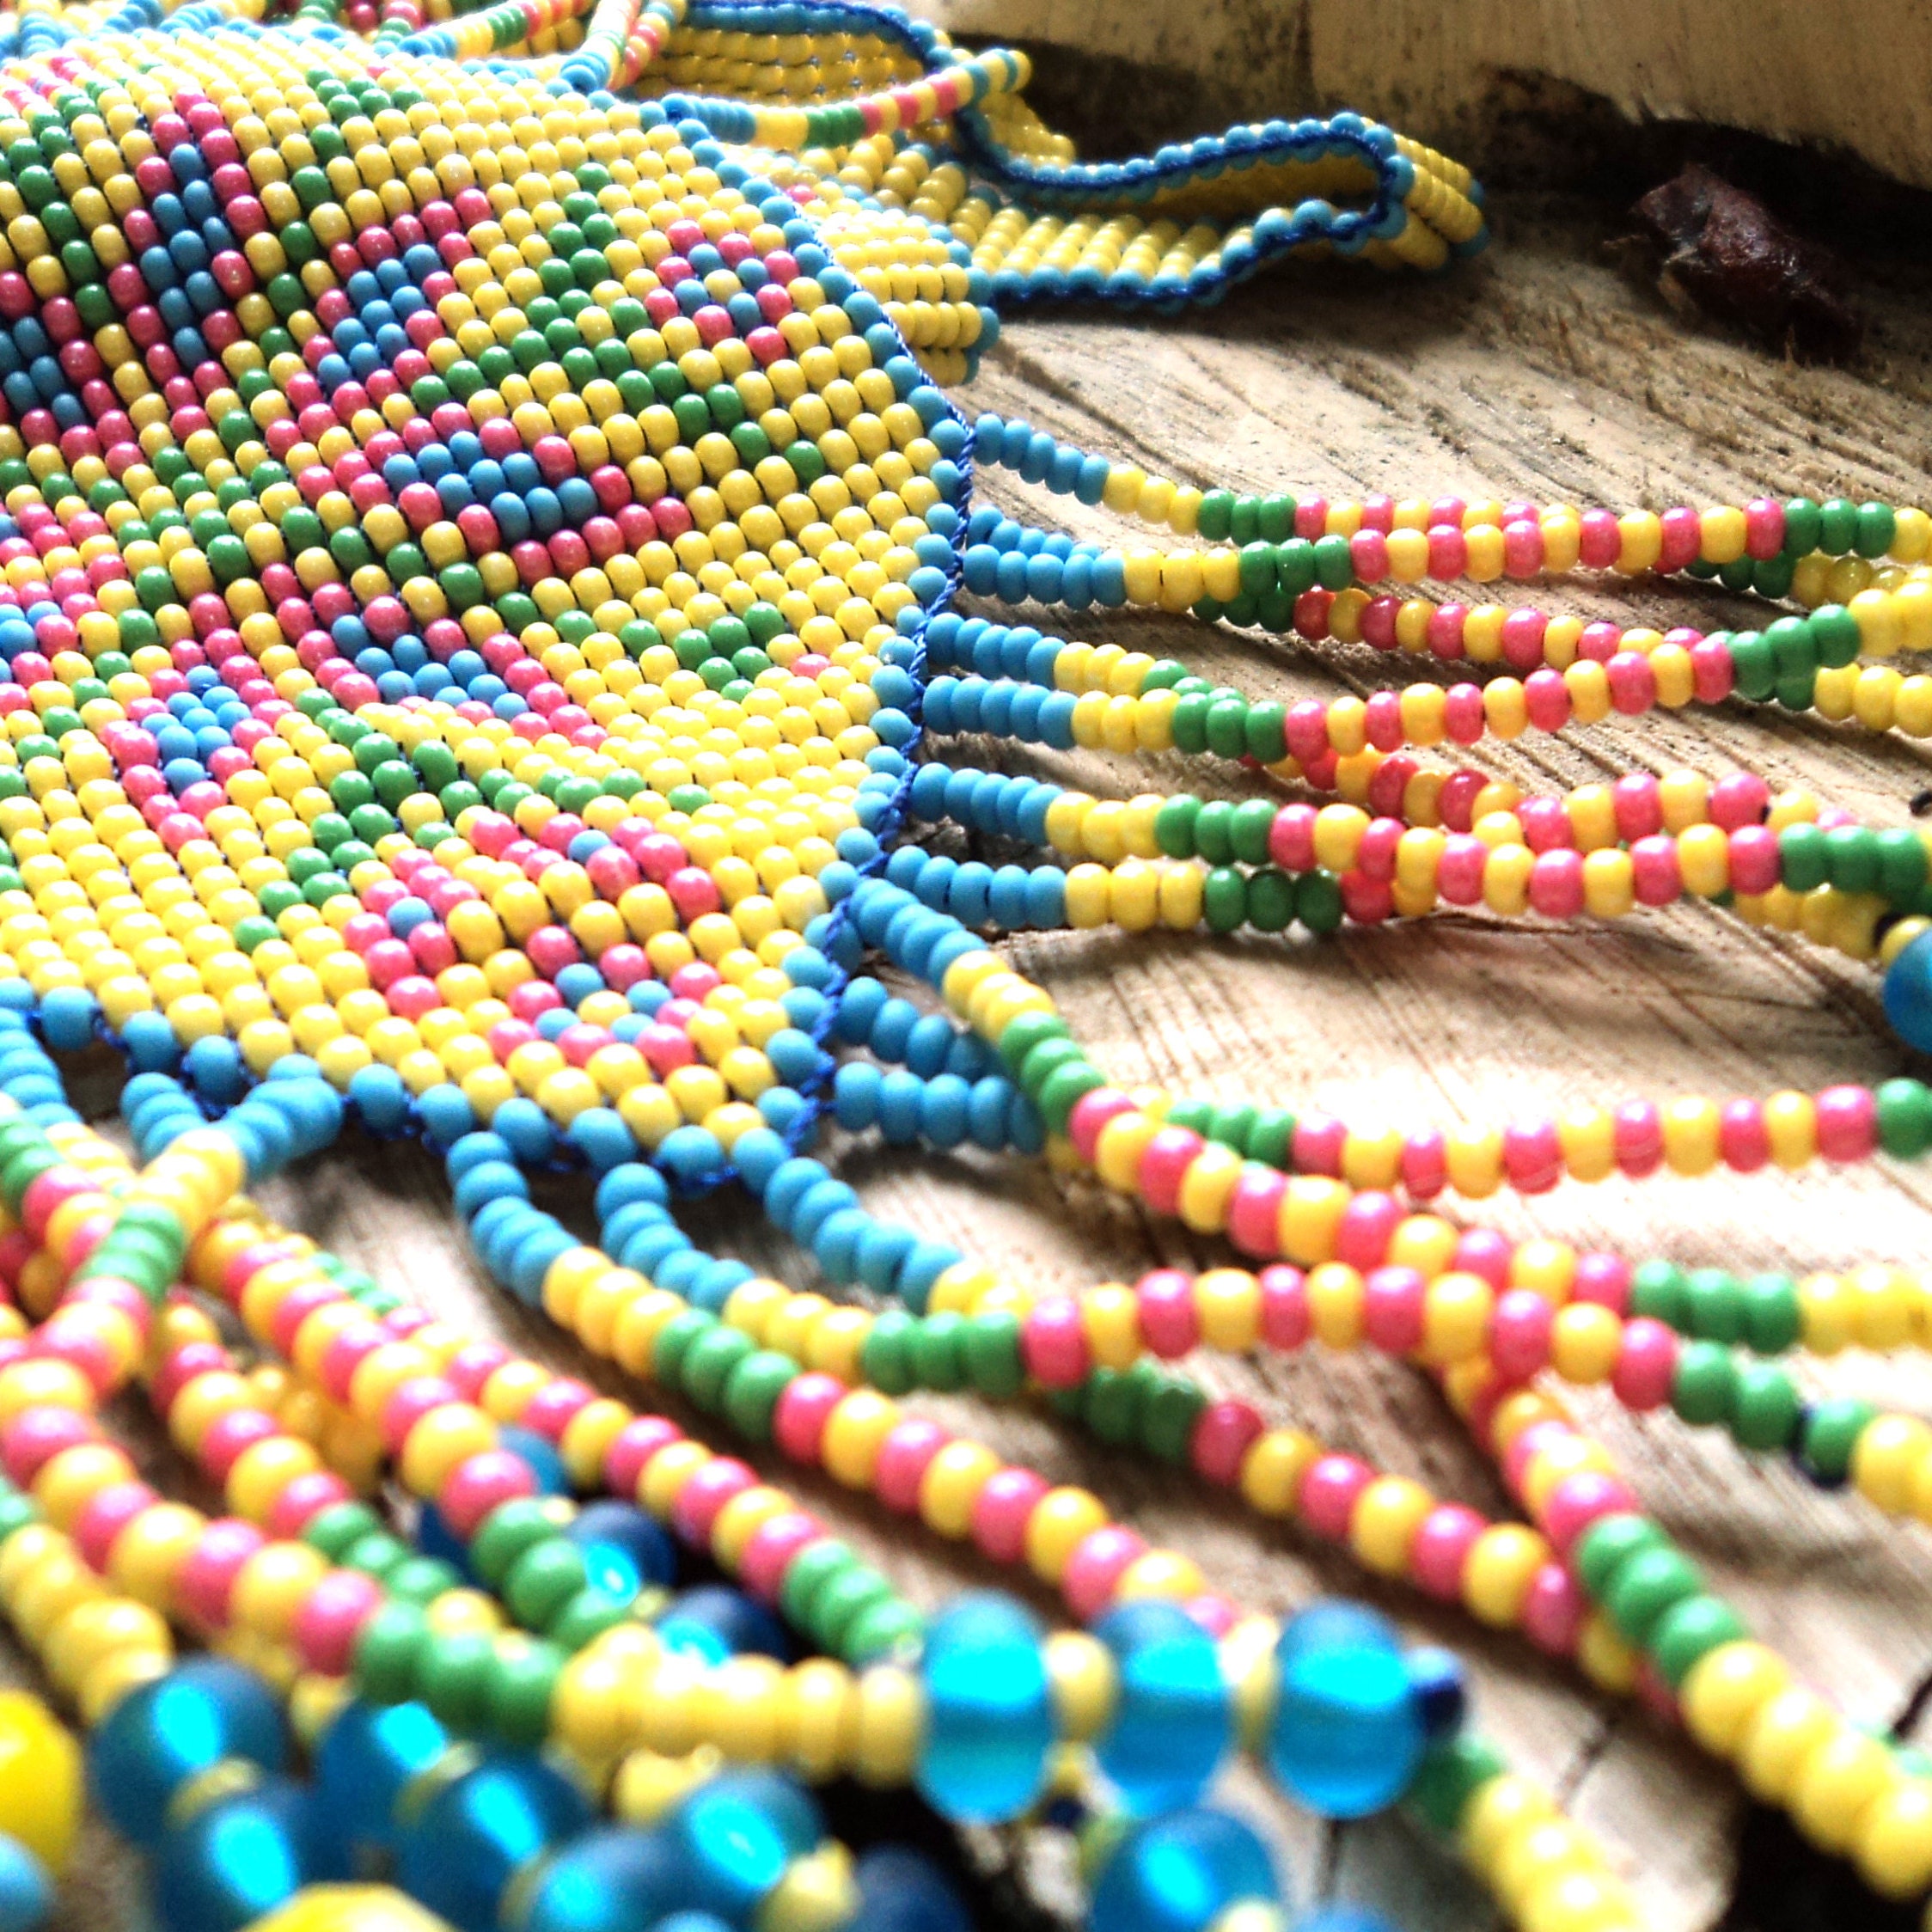 NikasHandmade - Unique jewelry and home decor made of beads